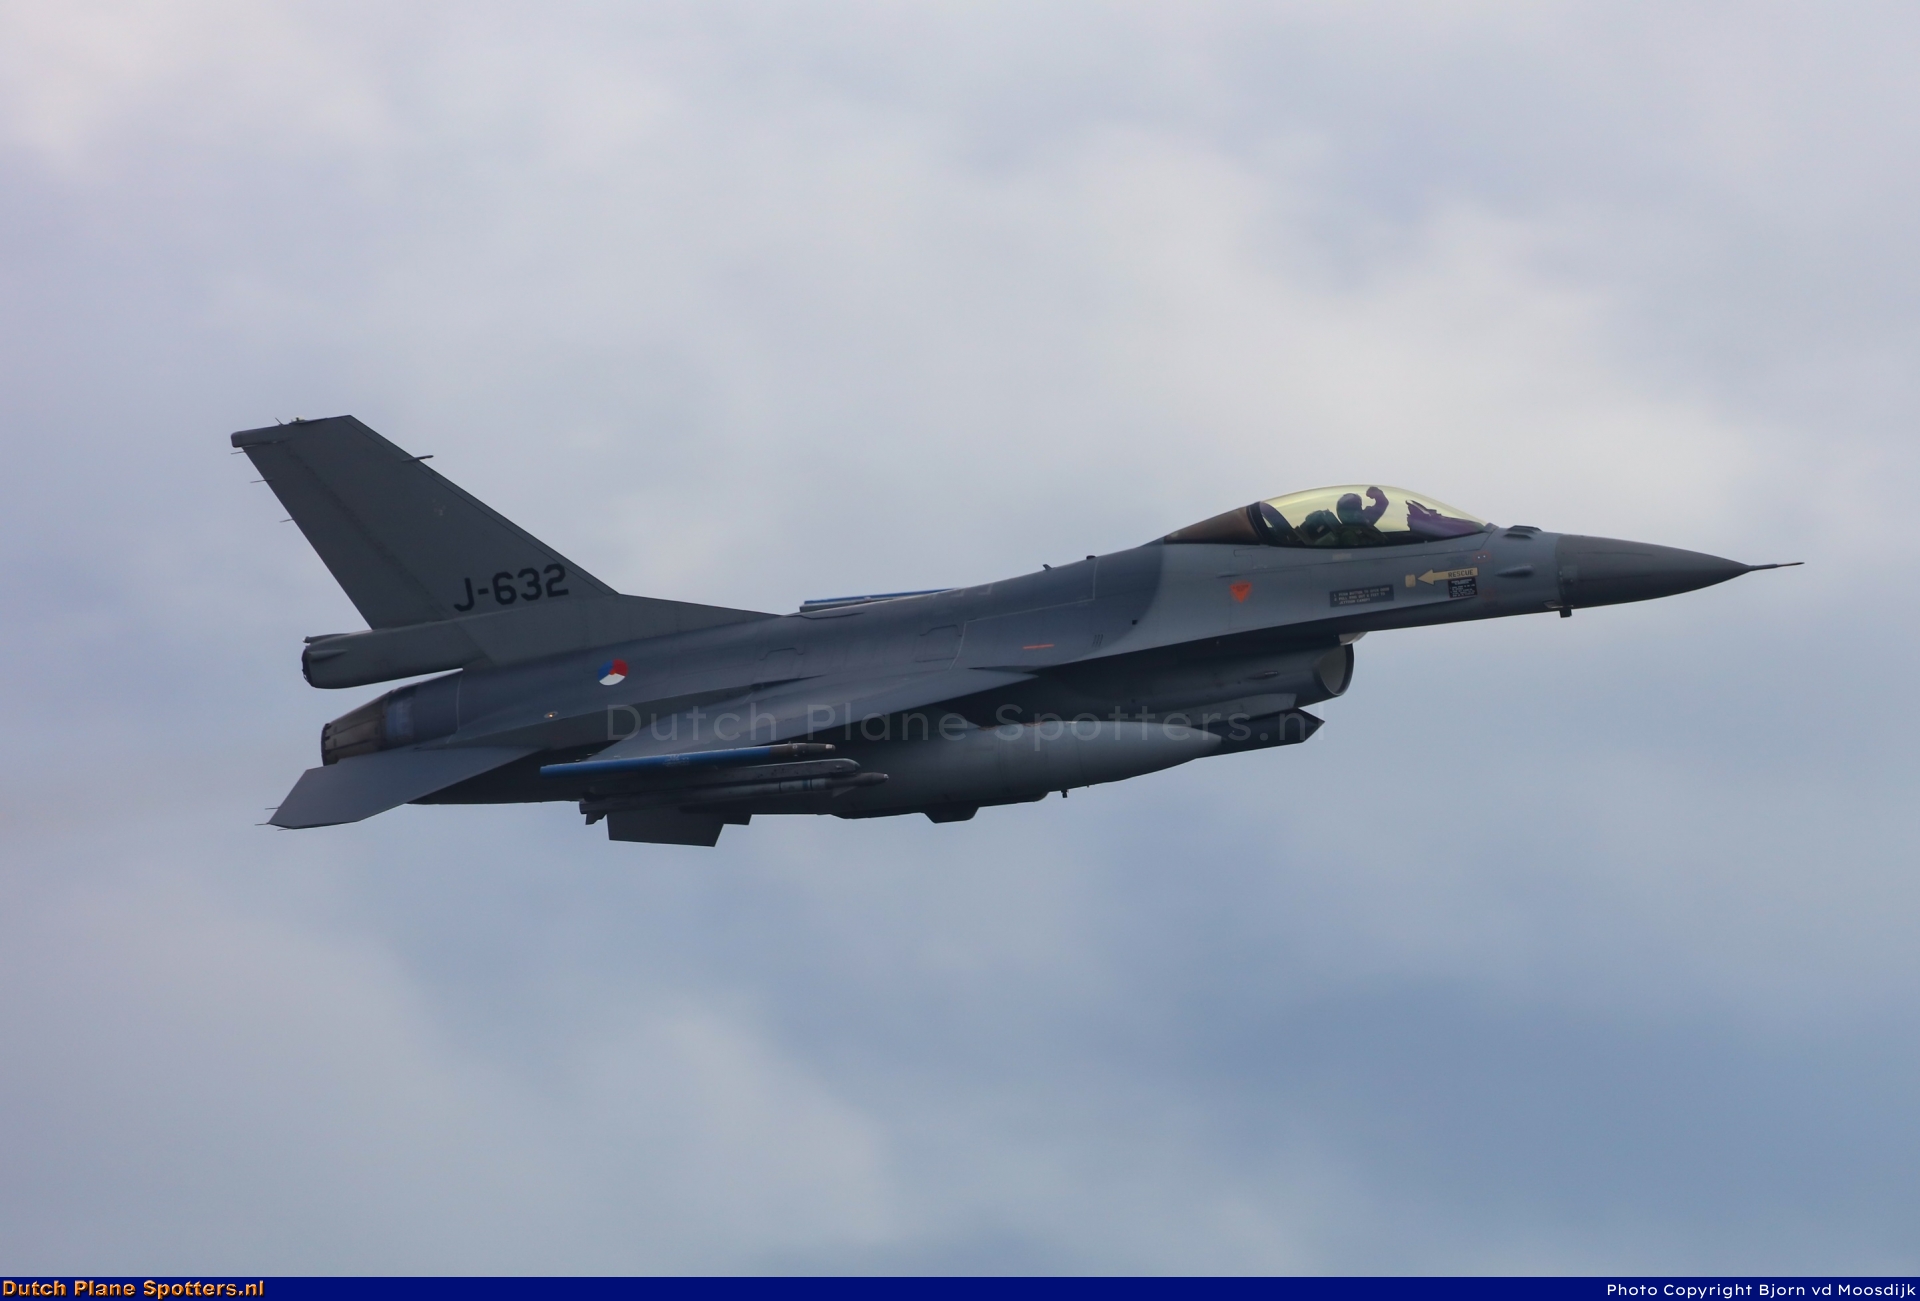 J-632 General Dynamics F-16 Fighting Falcon MIL - Dutch Royal Air Force by Bjorn van de Moosdijk